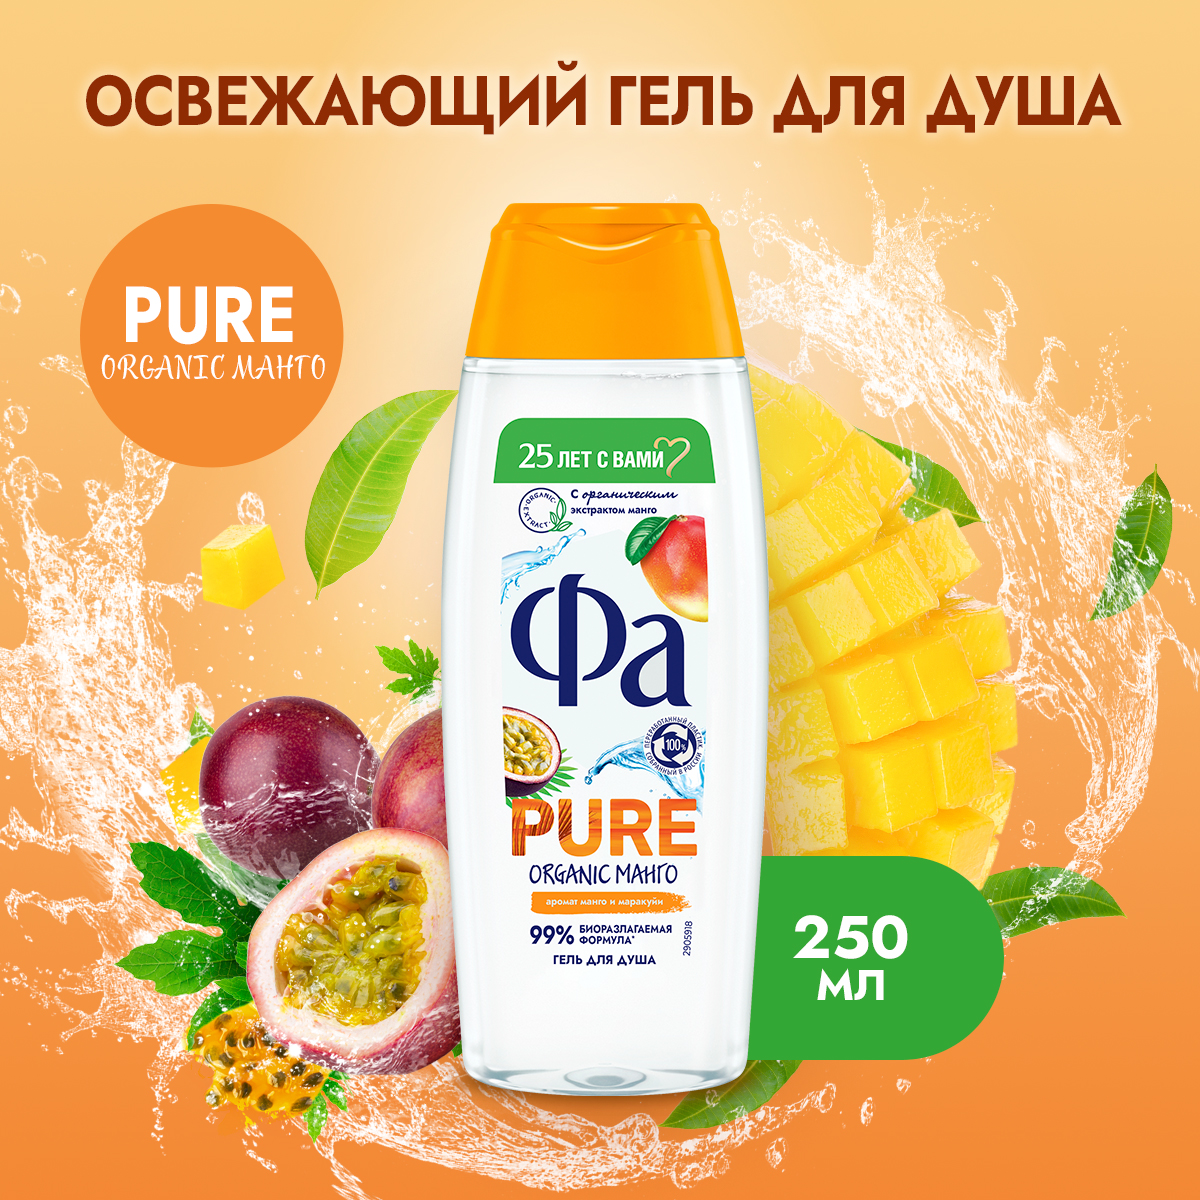 Гель для душа Fa Pure Organic аромат манго и маракуйи 250 мл карамель леденцовая на палочке со вкусом маракуйи малины манго 9 г